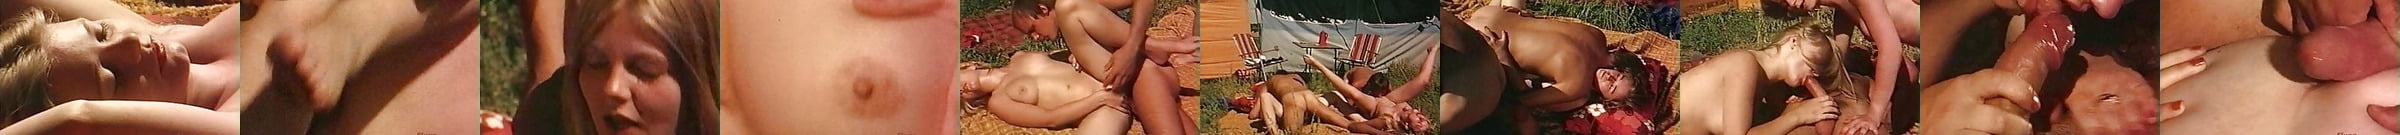 Heibe Schnecken 1979 Titty Holes Porn Video 5a Xhamster Xhamster